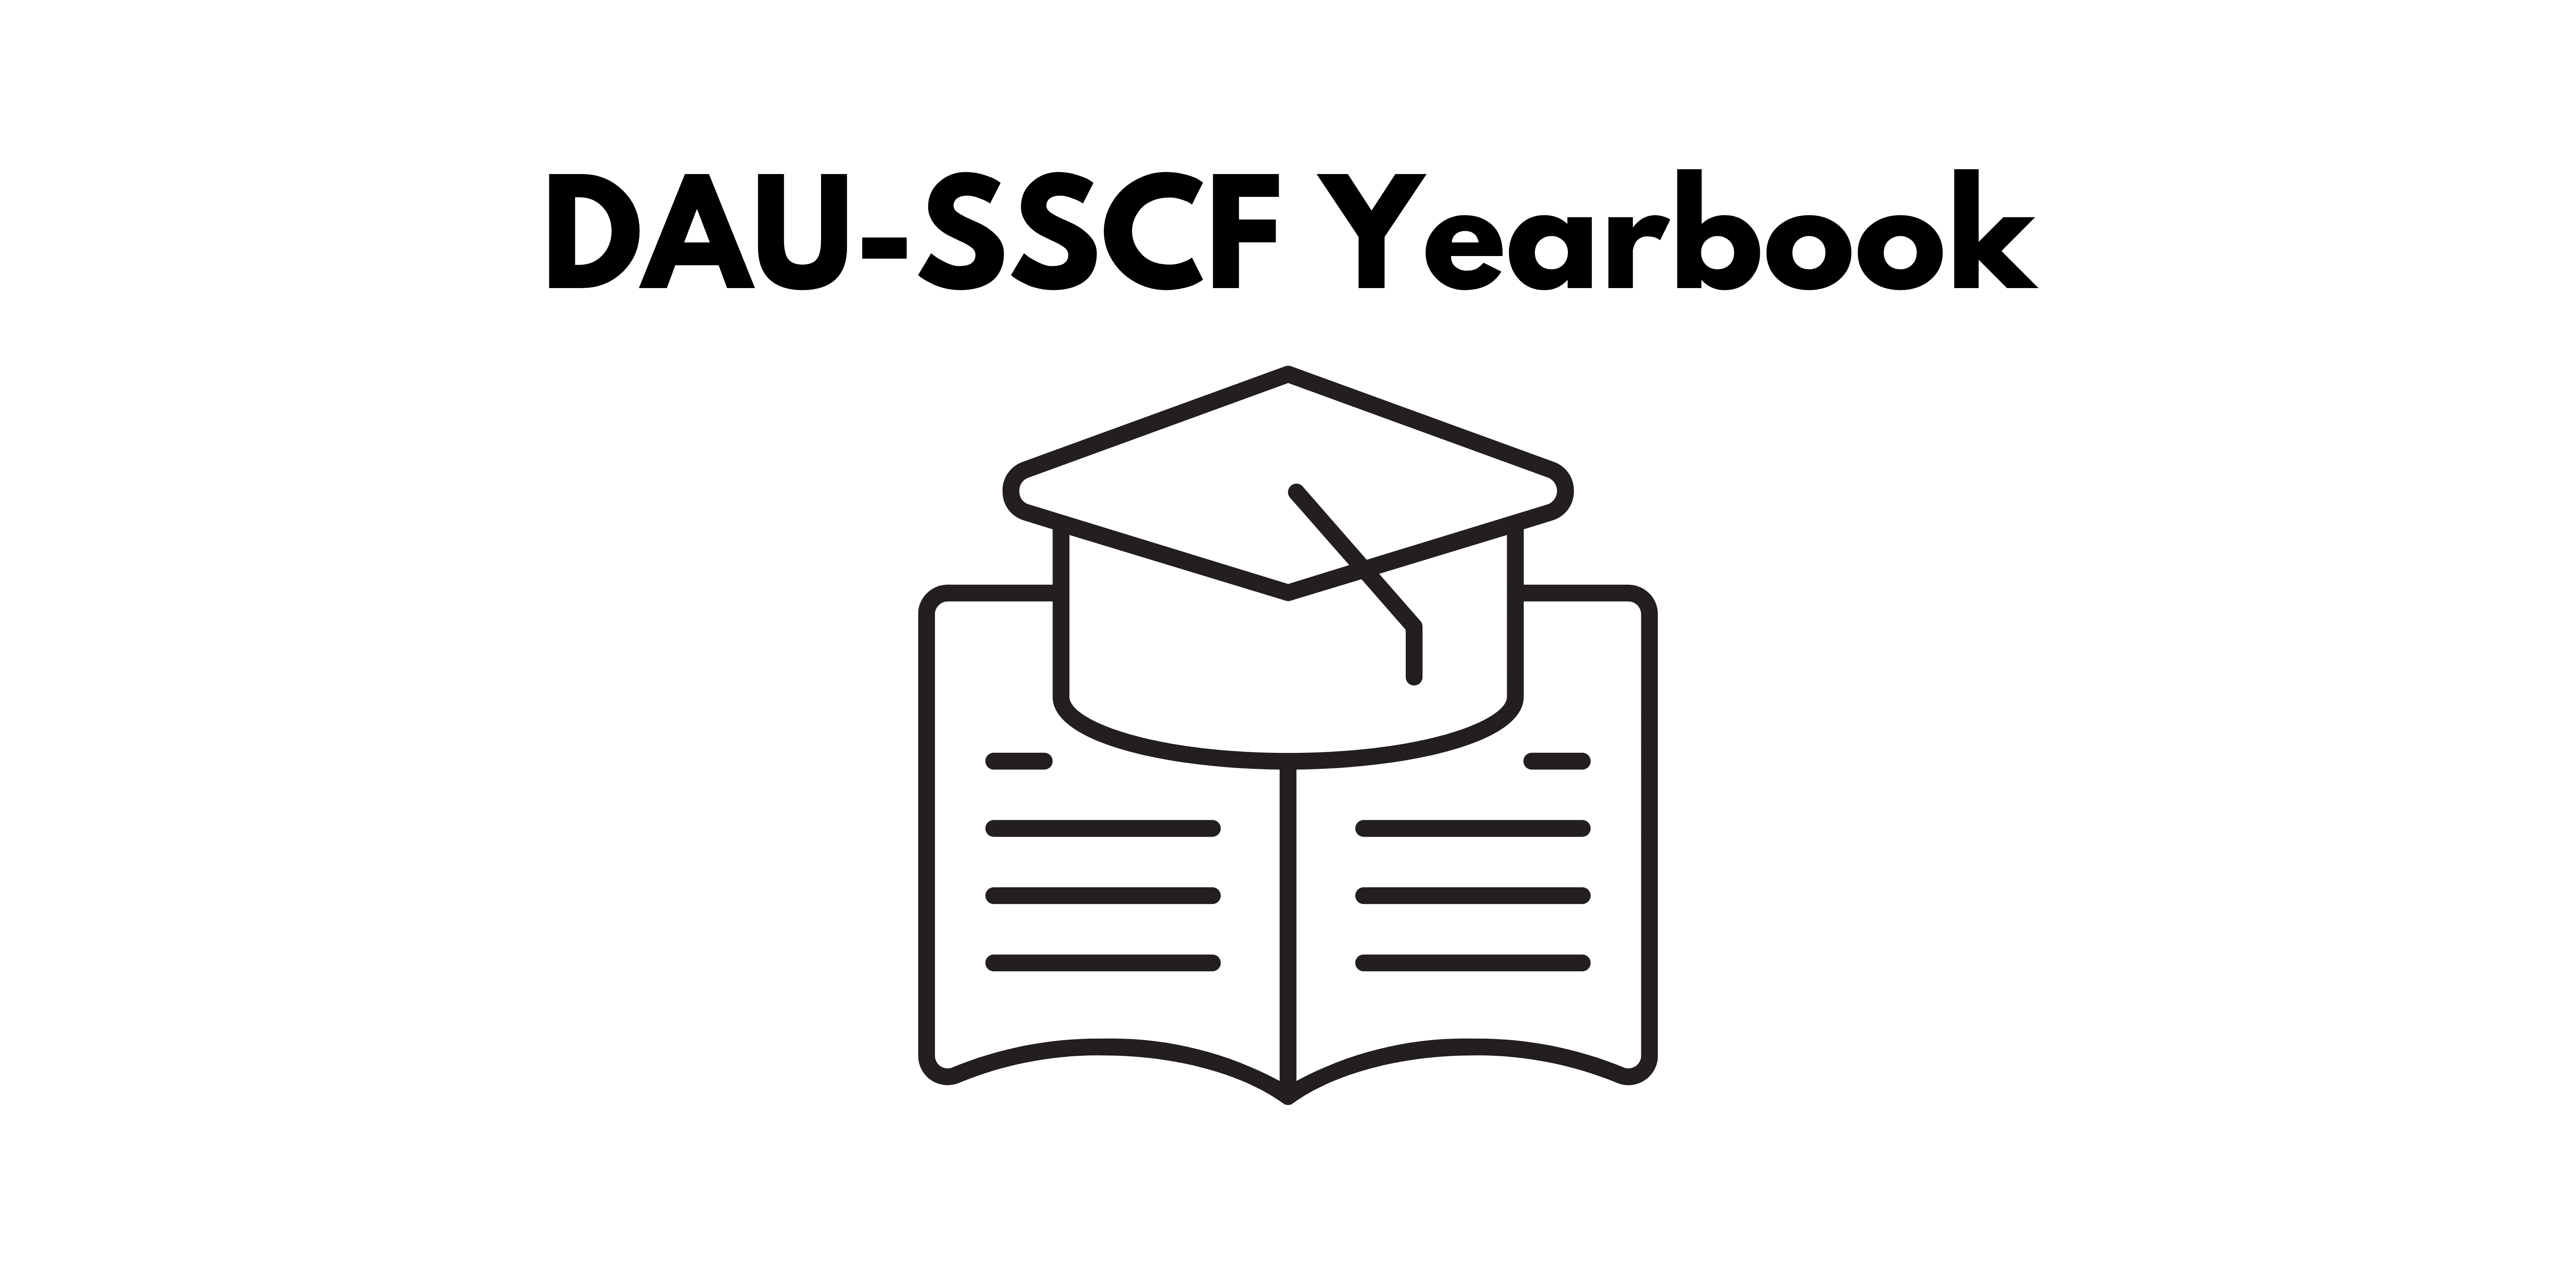 DAU-SSCF Yearbook